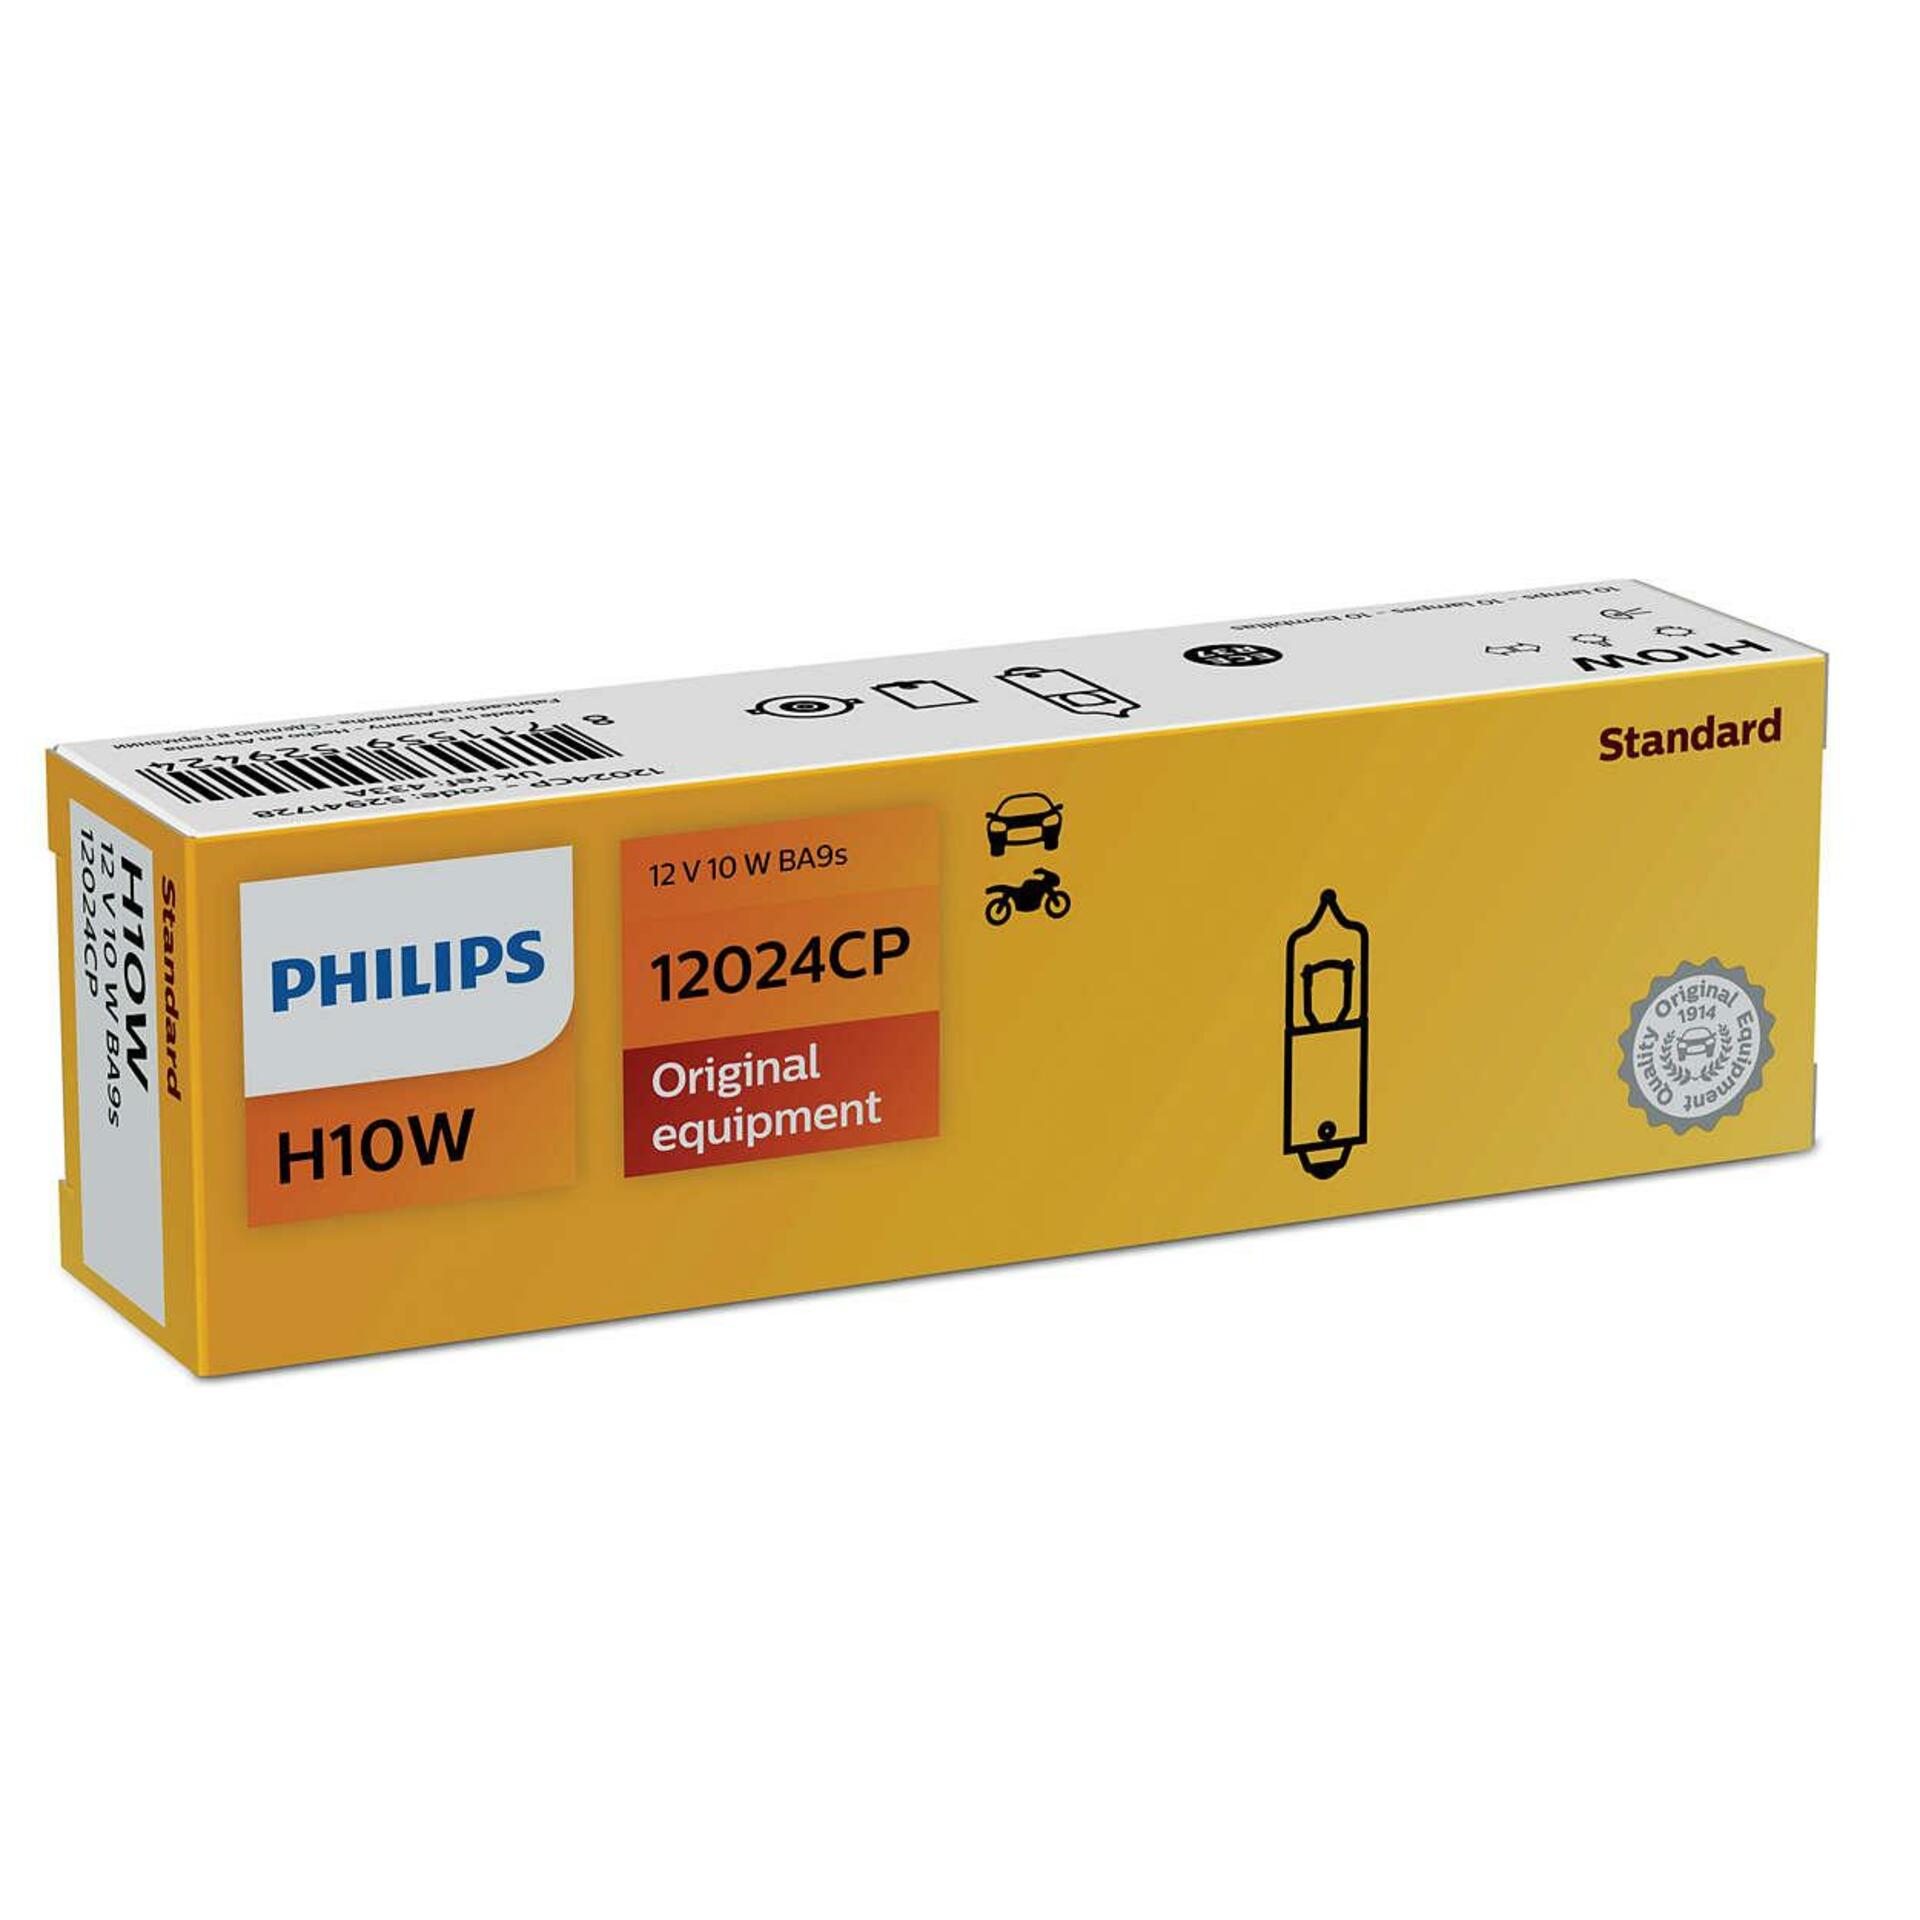 Philips H10W 12V 10W 12024CP